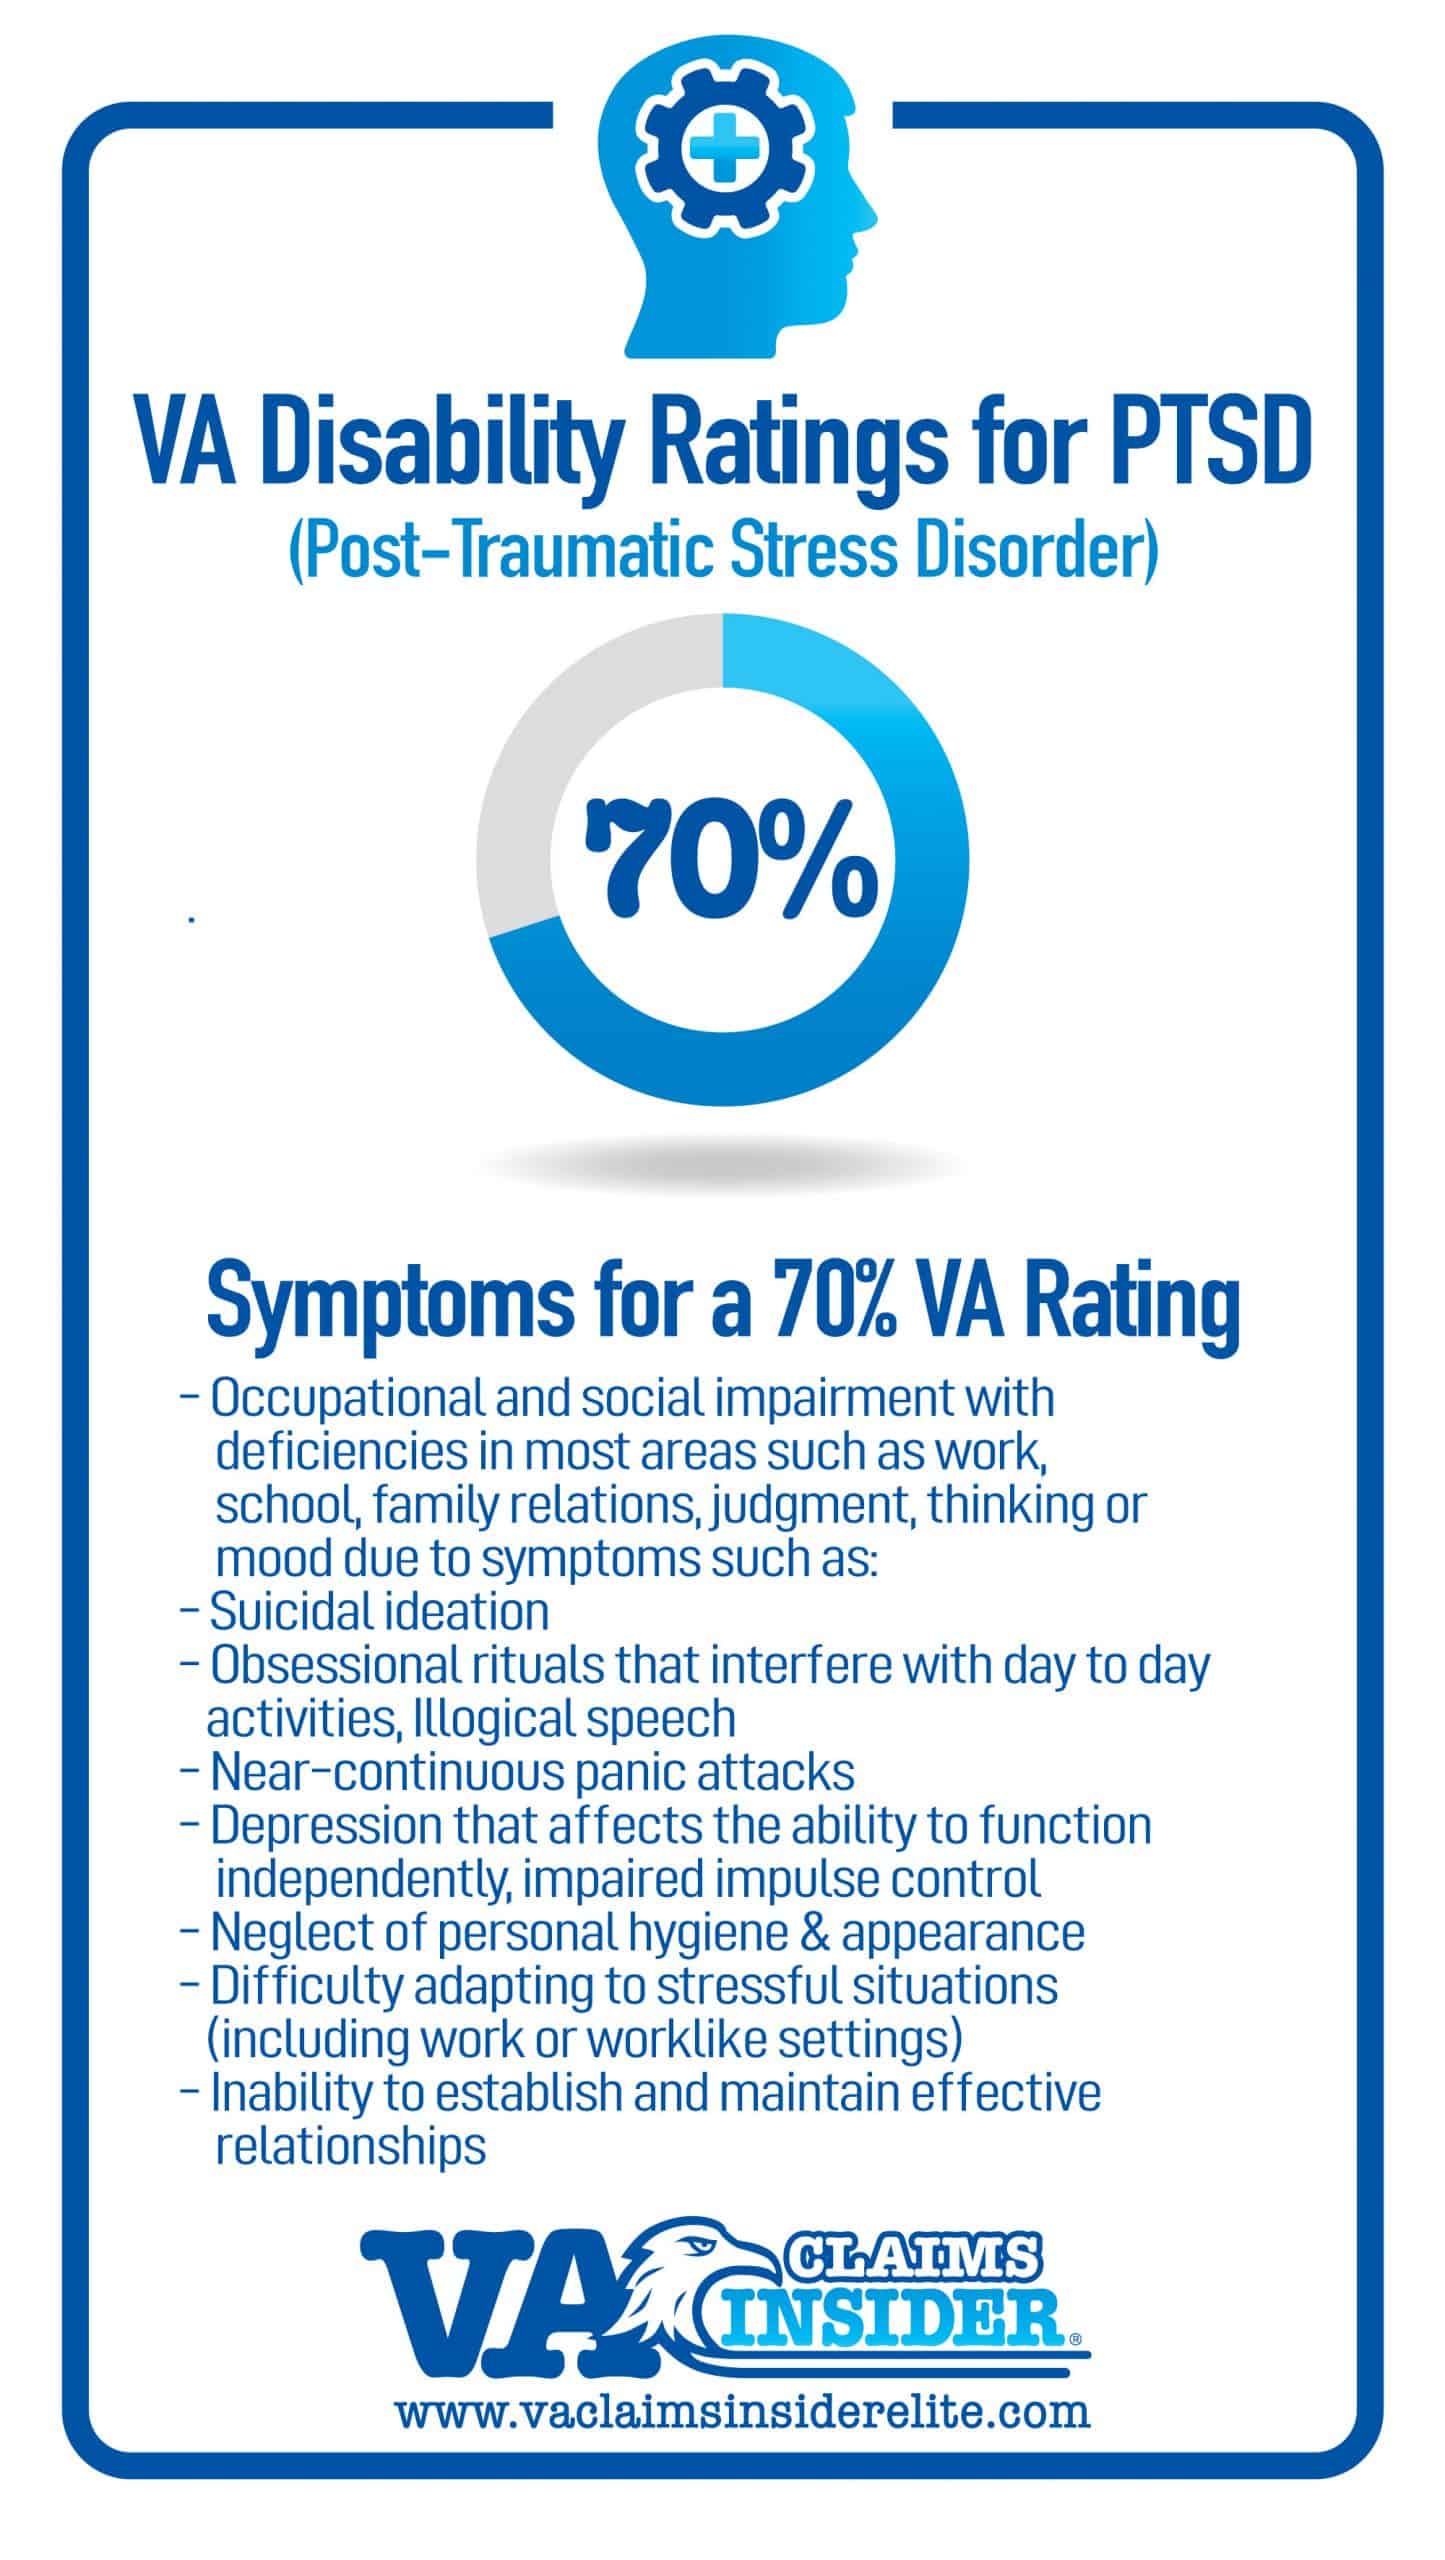 Symptoms of 70 Percent VA Rating for PTSD